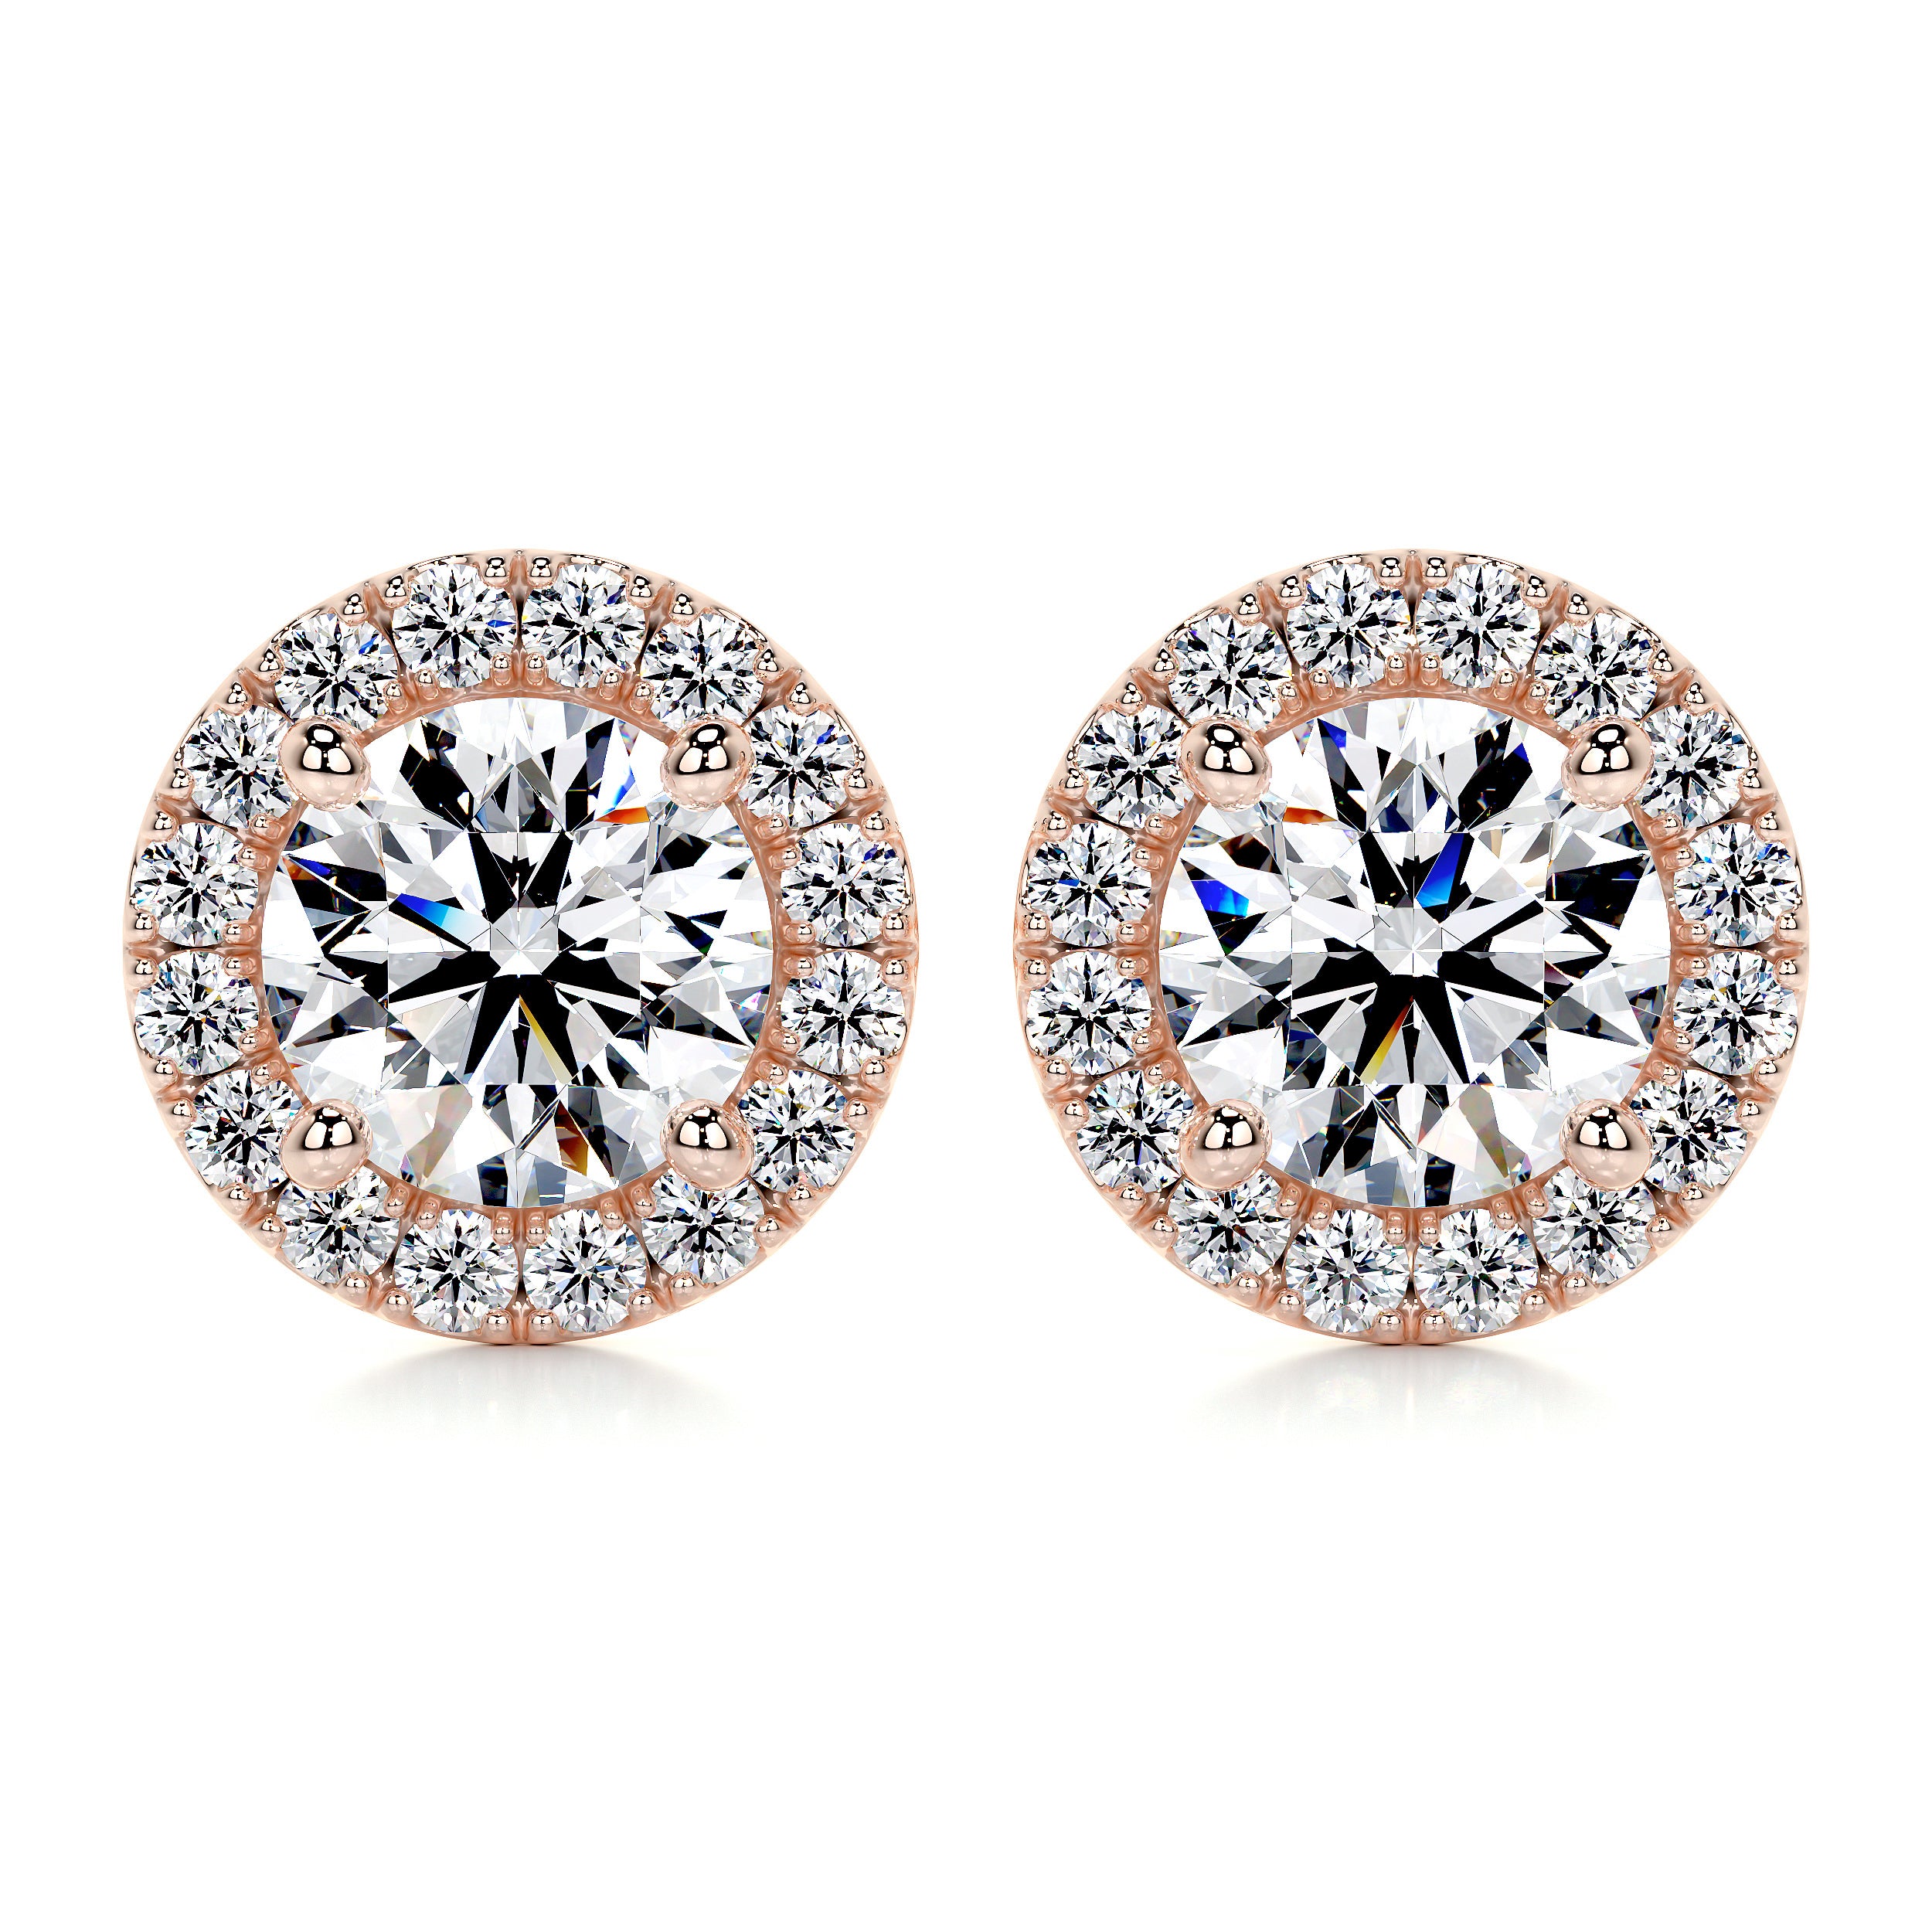 Erica Diamond Earrings   (1 Carat) -14K Rose Gold